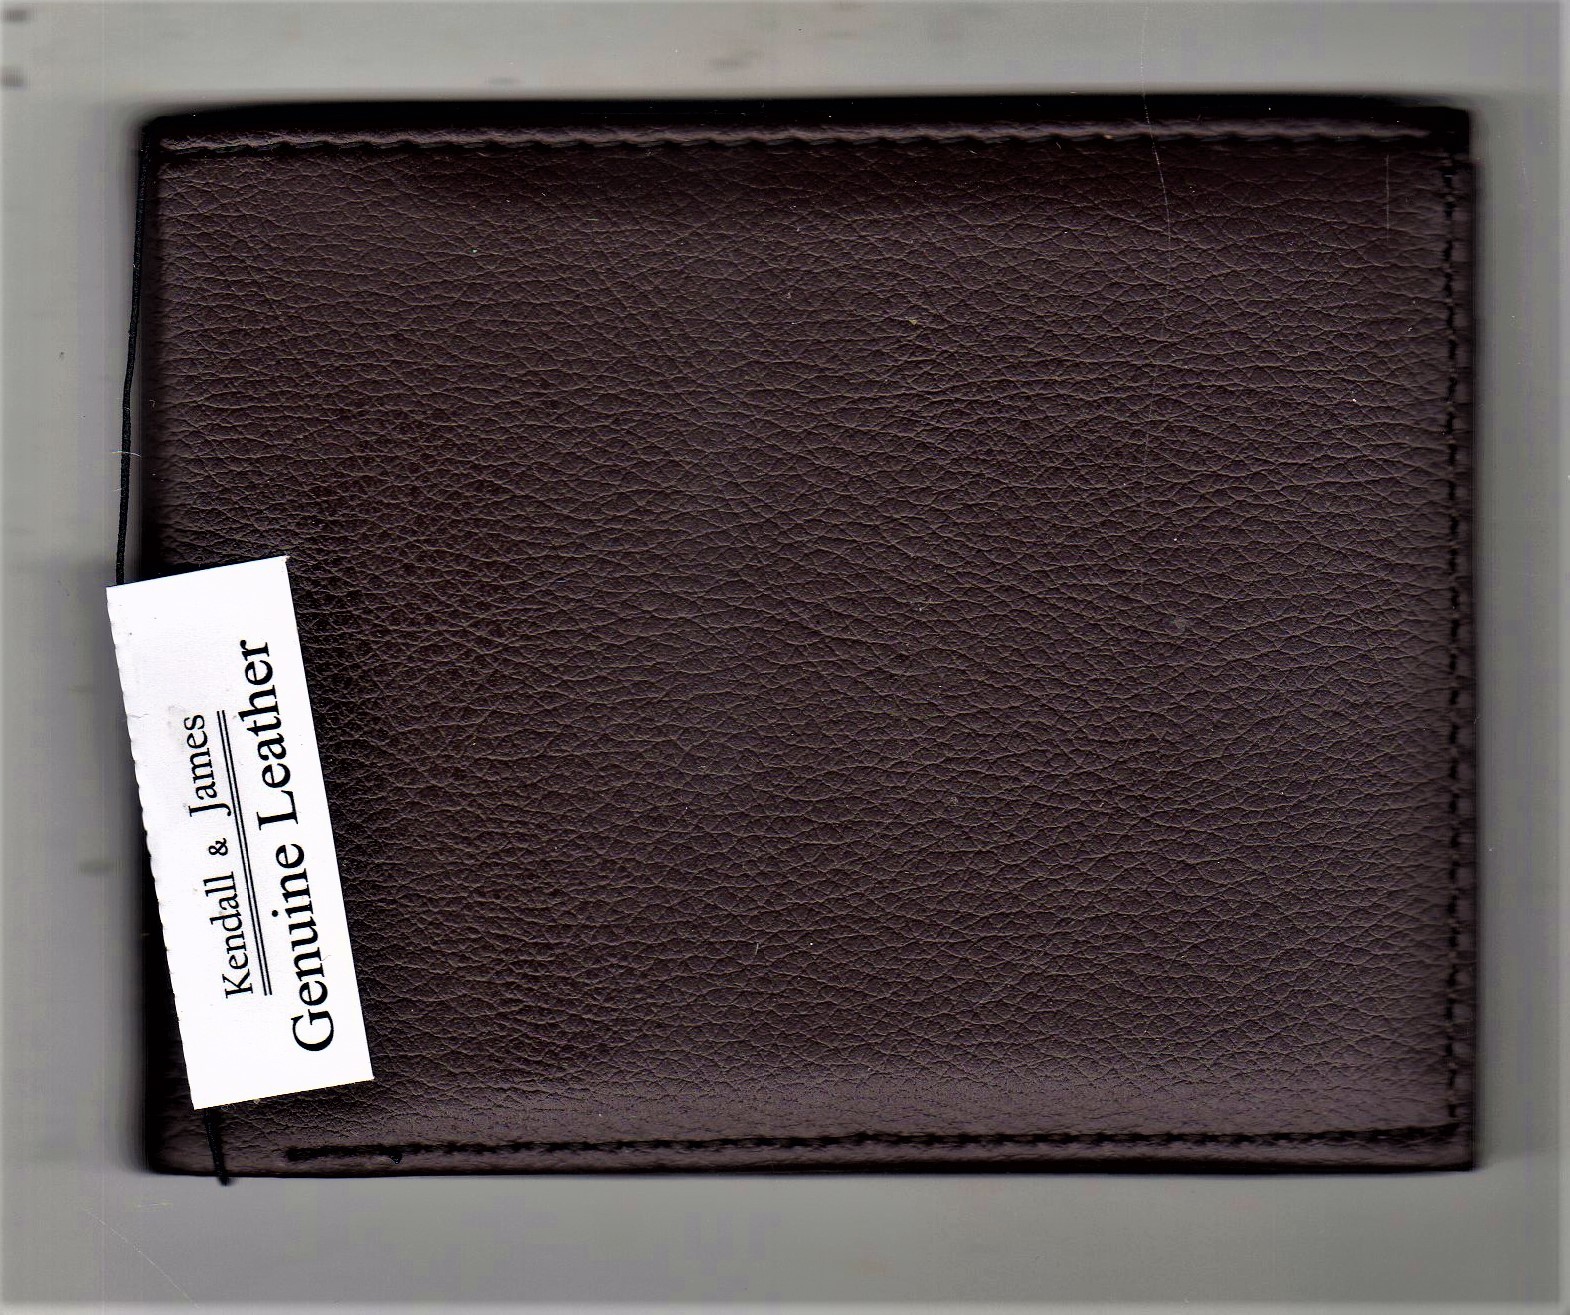 Claasico Men's Slim Front Pocket Leather Money Clip Wallet